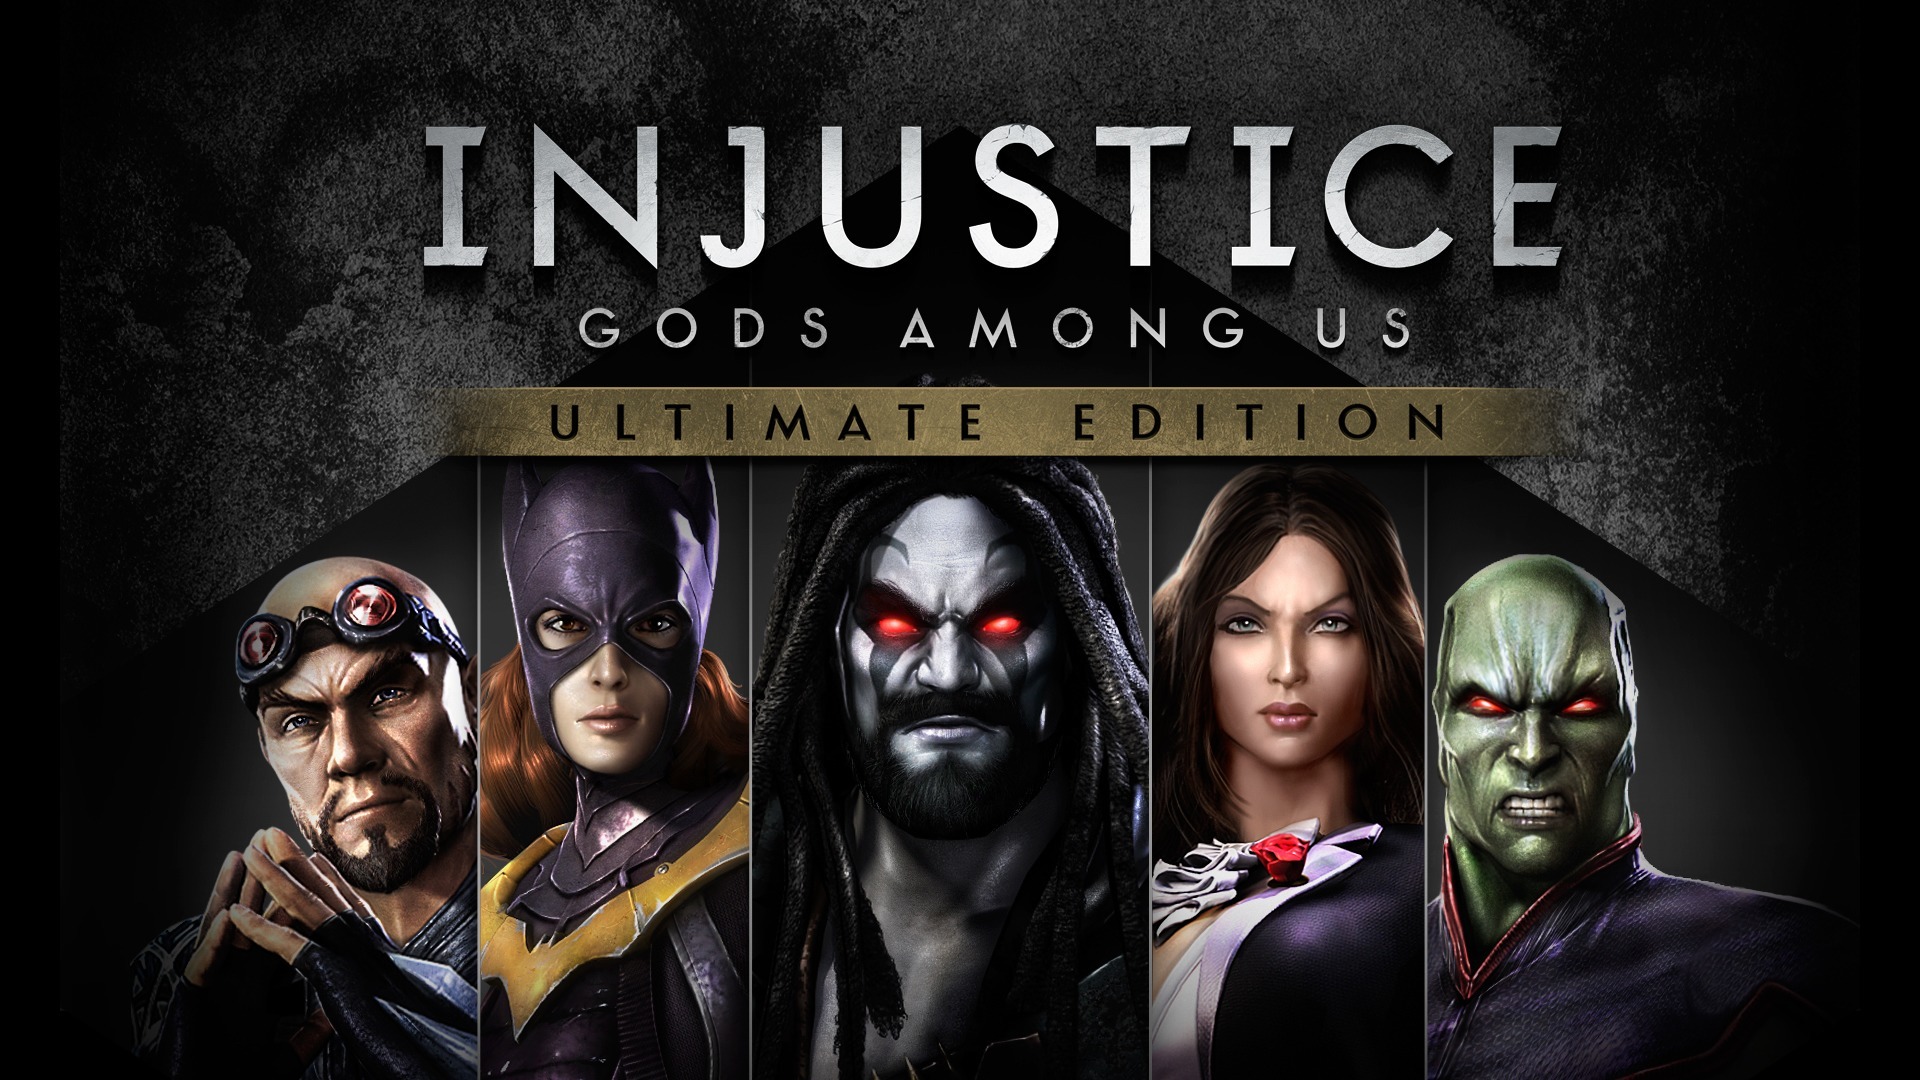 Injustice gods андроид. Injustice Gods among us Ultimate Edition. Игра Инджастис 3. Инджастис 4. Инджастис Gods among us Ultimate Edition.